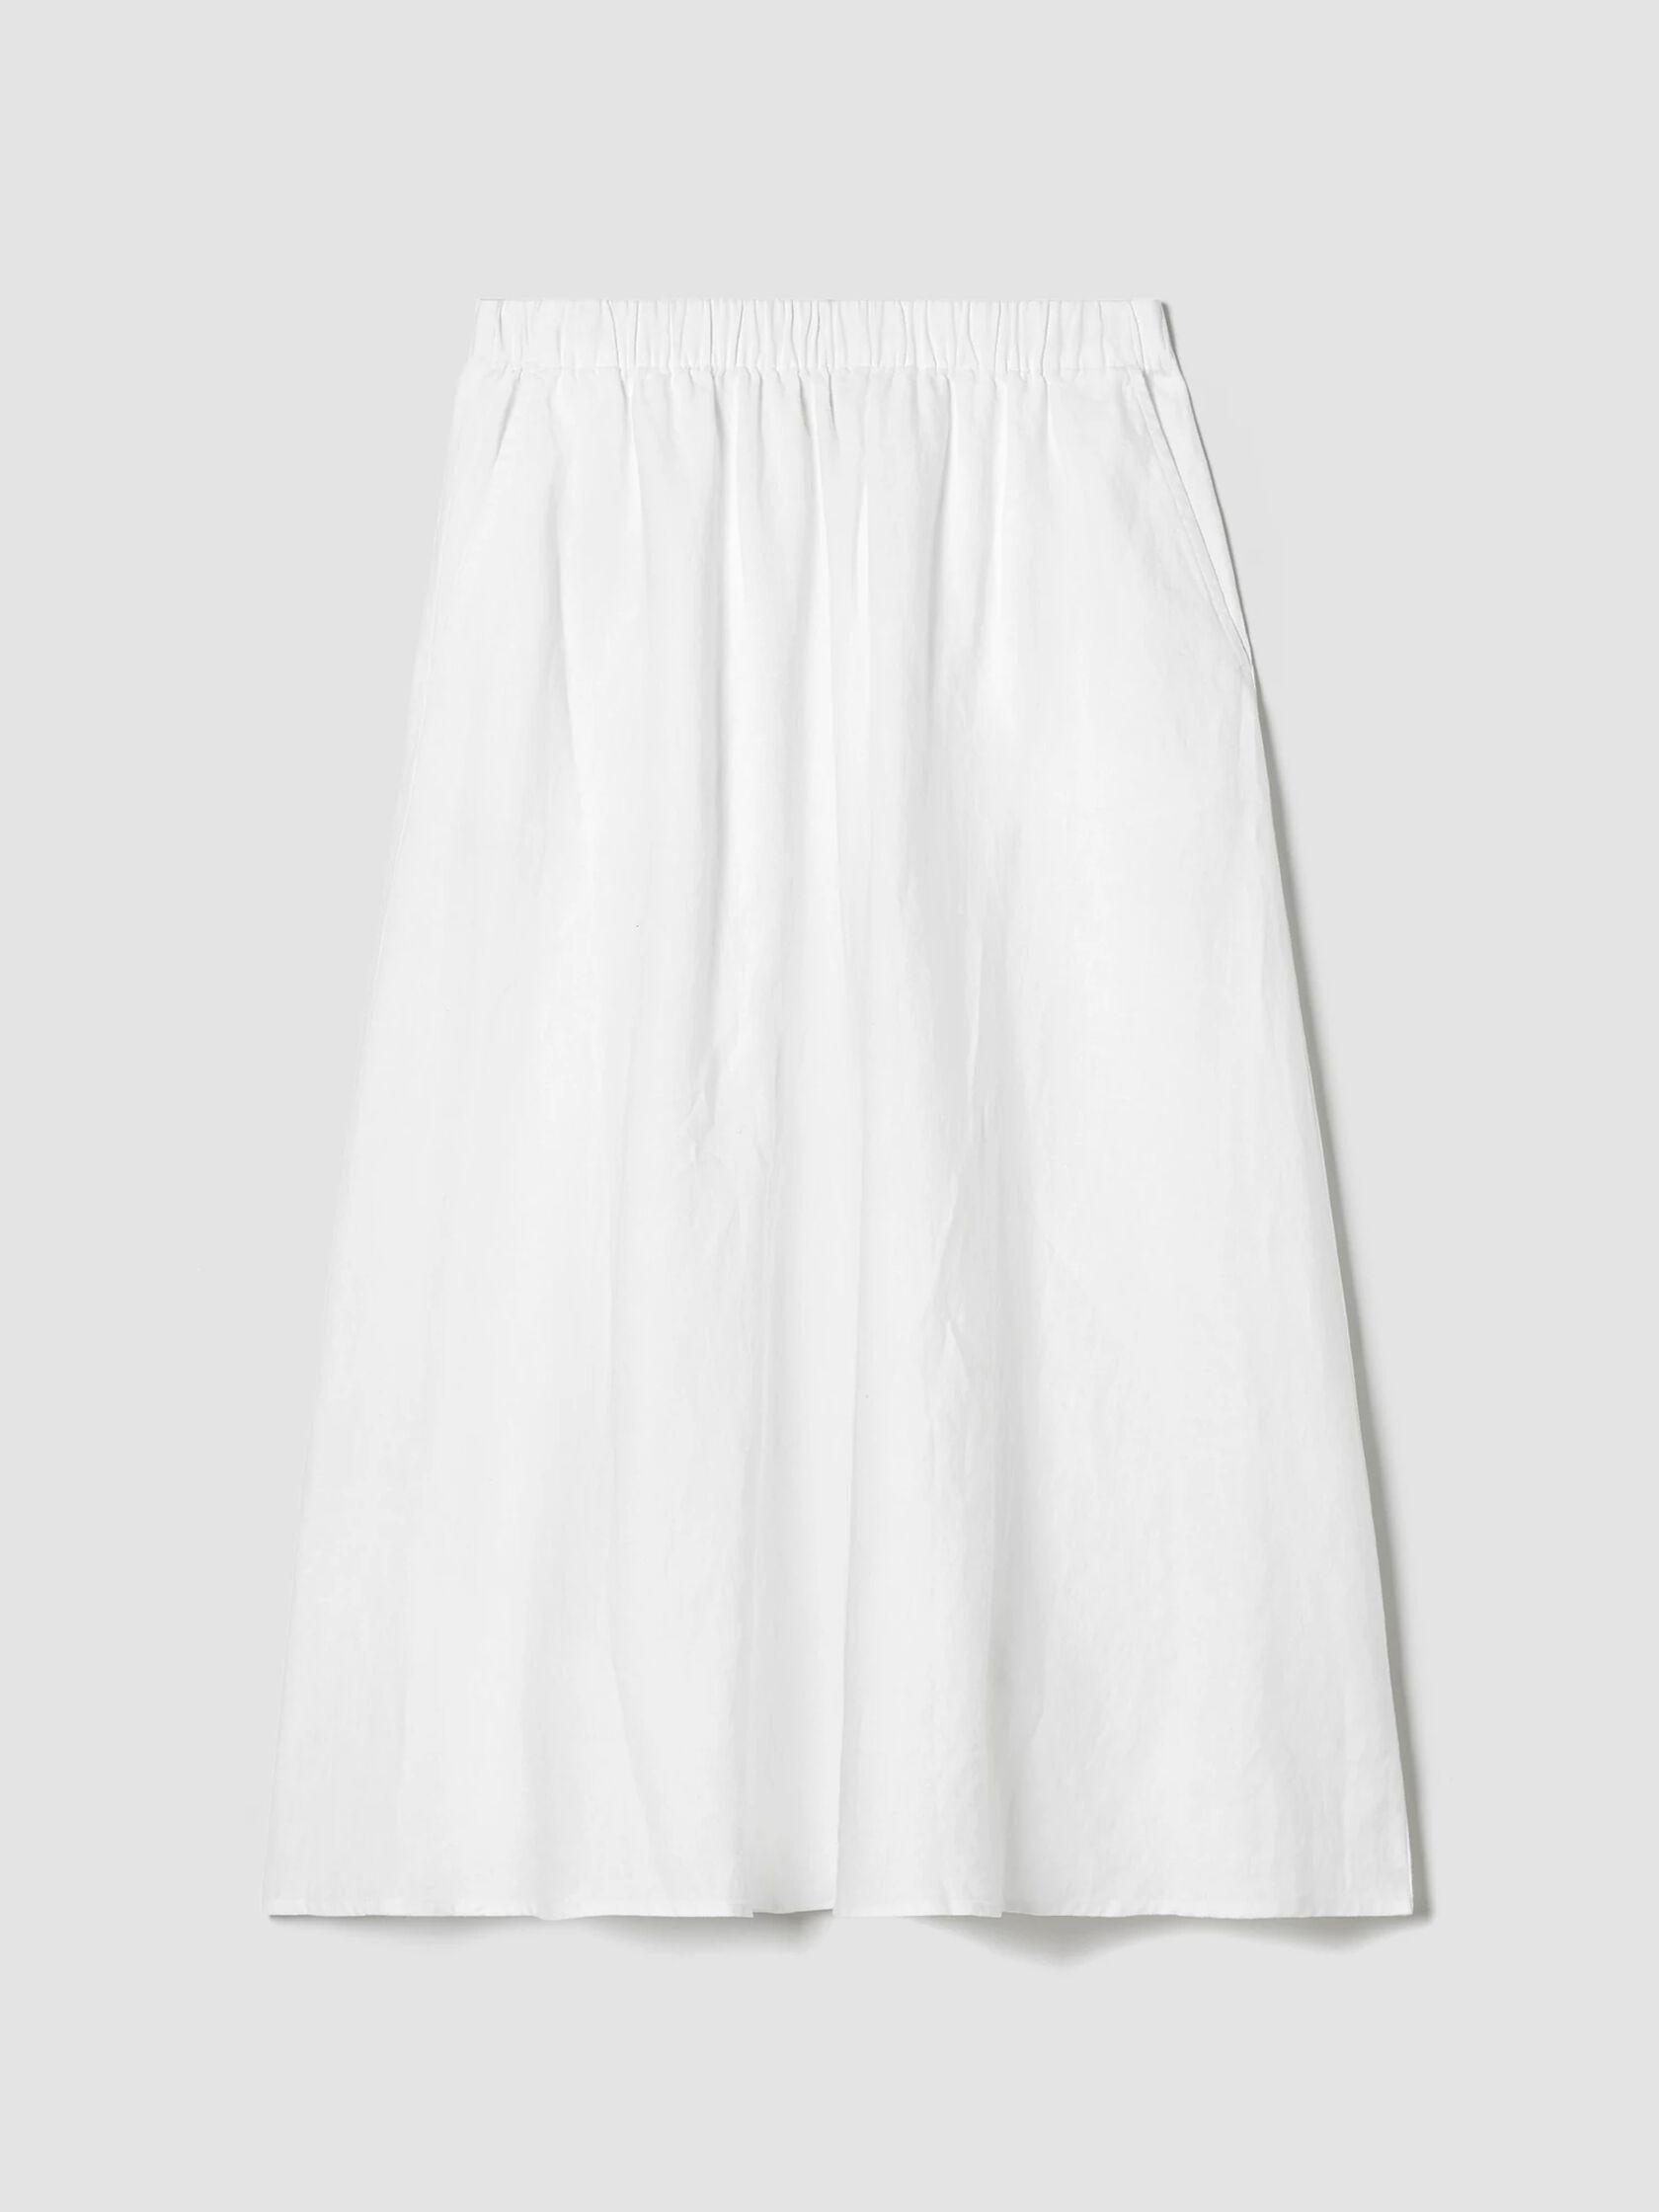 Pocket Linen EILEEN | Skirt FISHER Organic